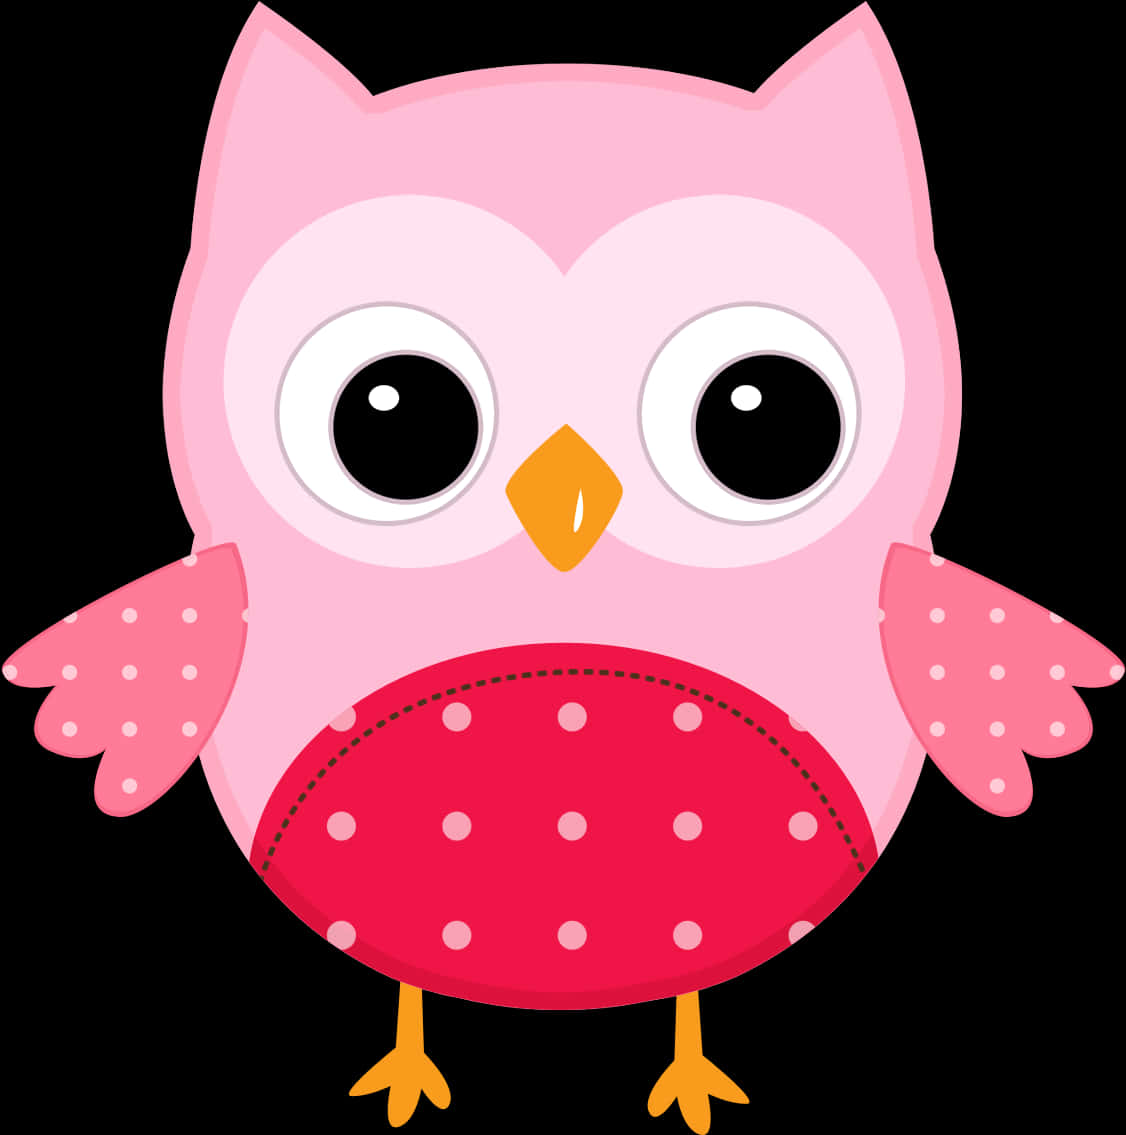 Cute Cartoon Owl Illustration PNG image